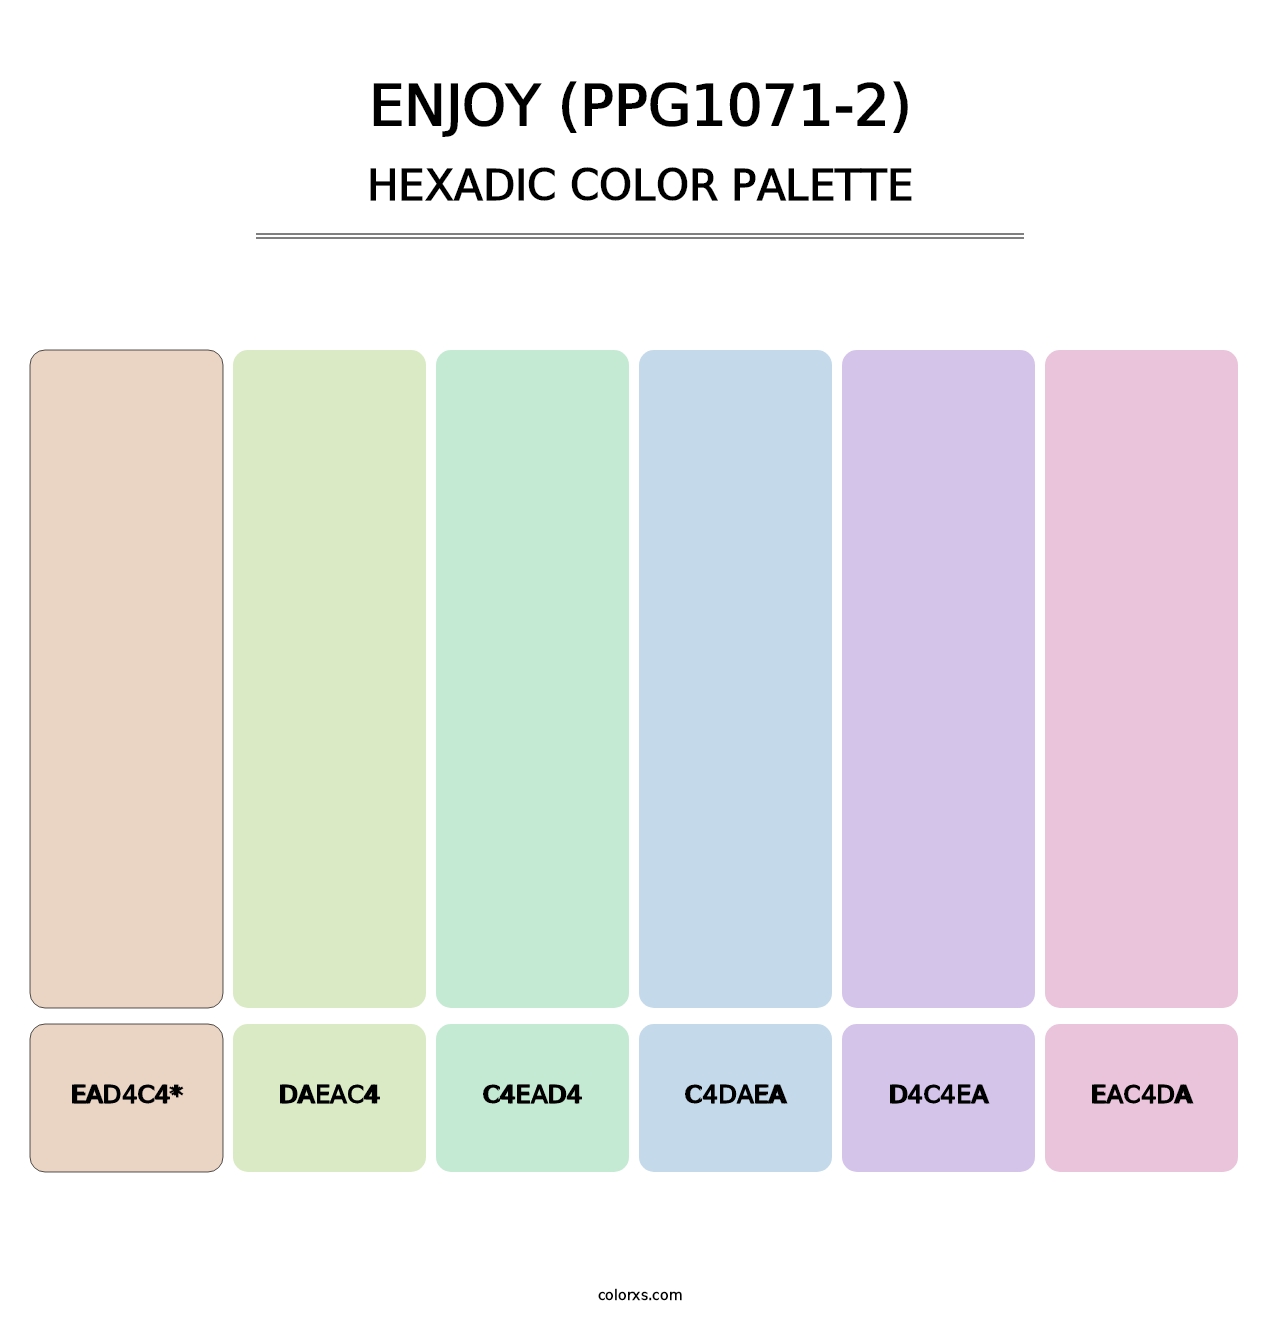 Enjoy (PPG1071-2) - Hexadic Color Palette